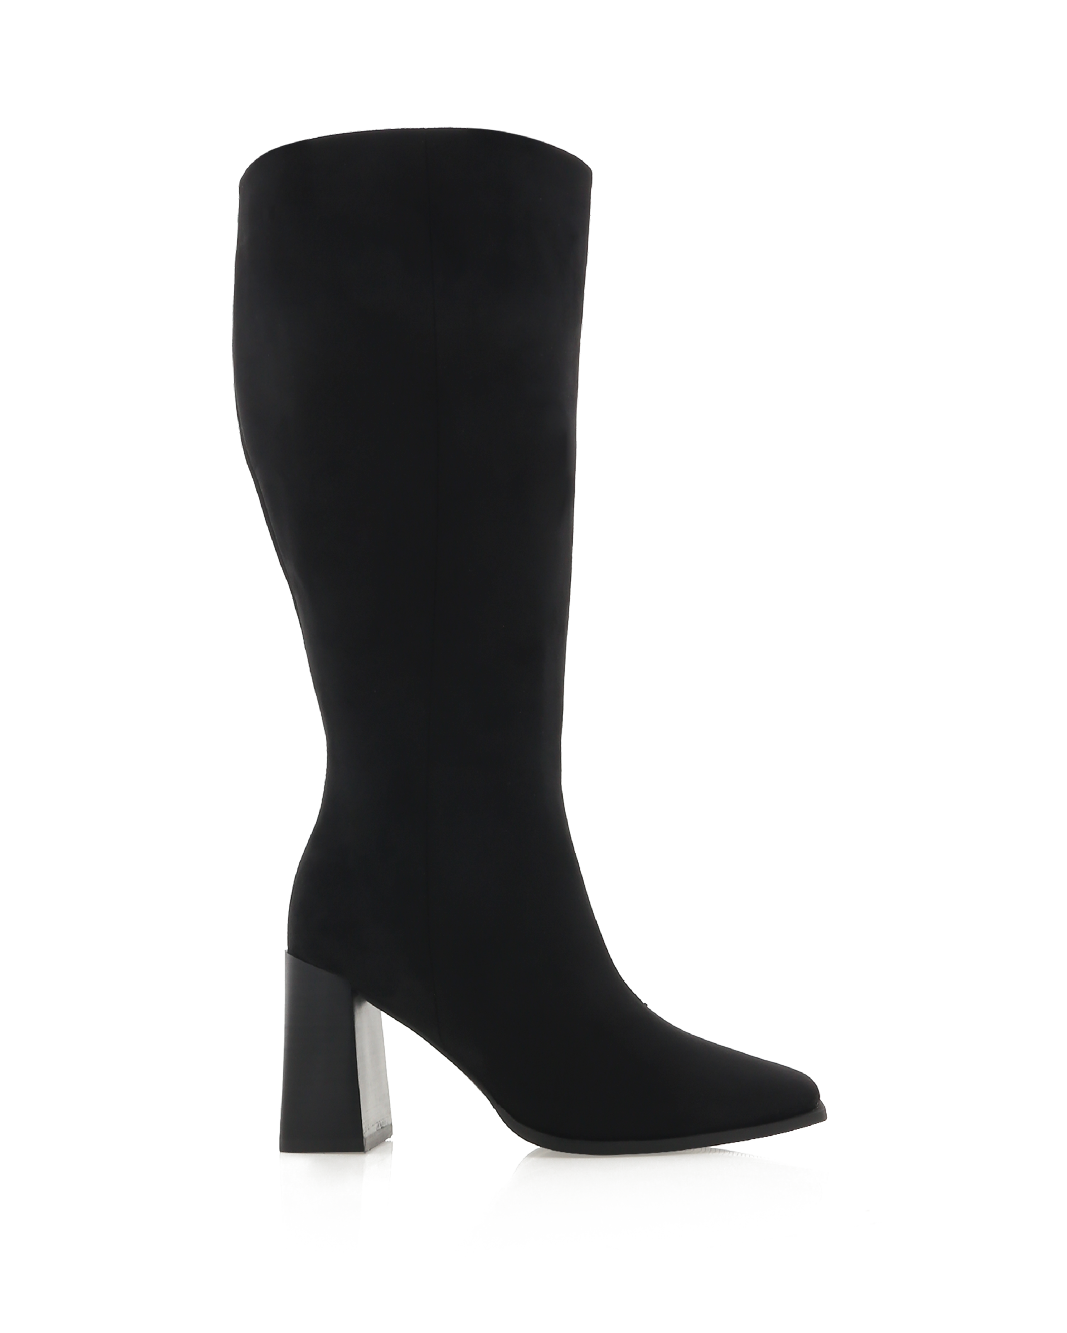 CASTON CURVE - BLACK SUEDE-Boots-Billini-Billini